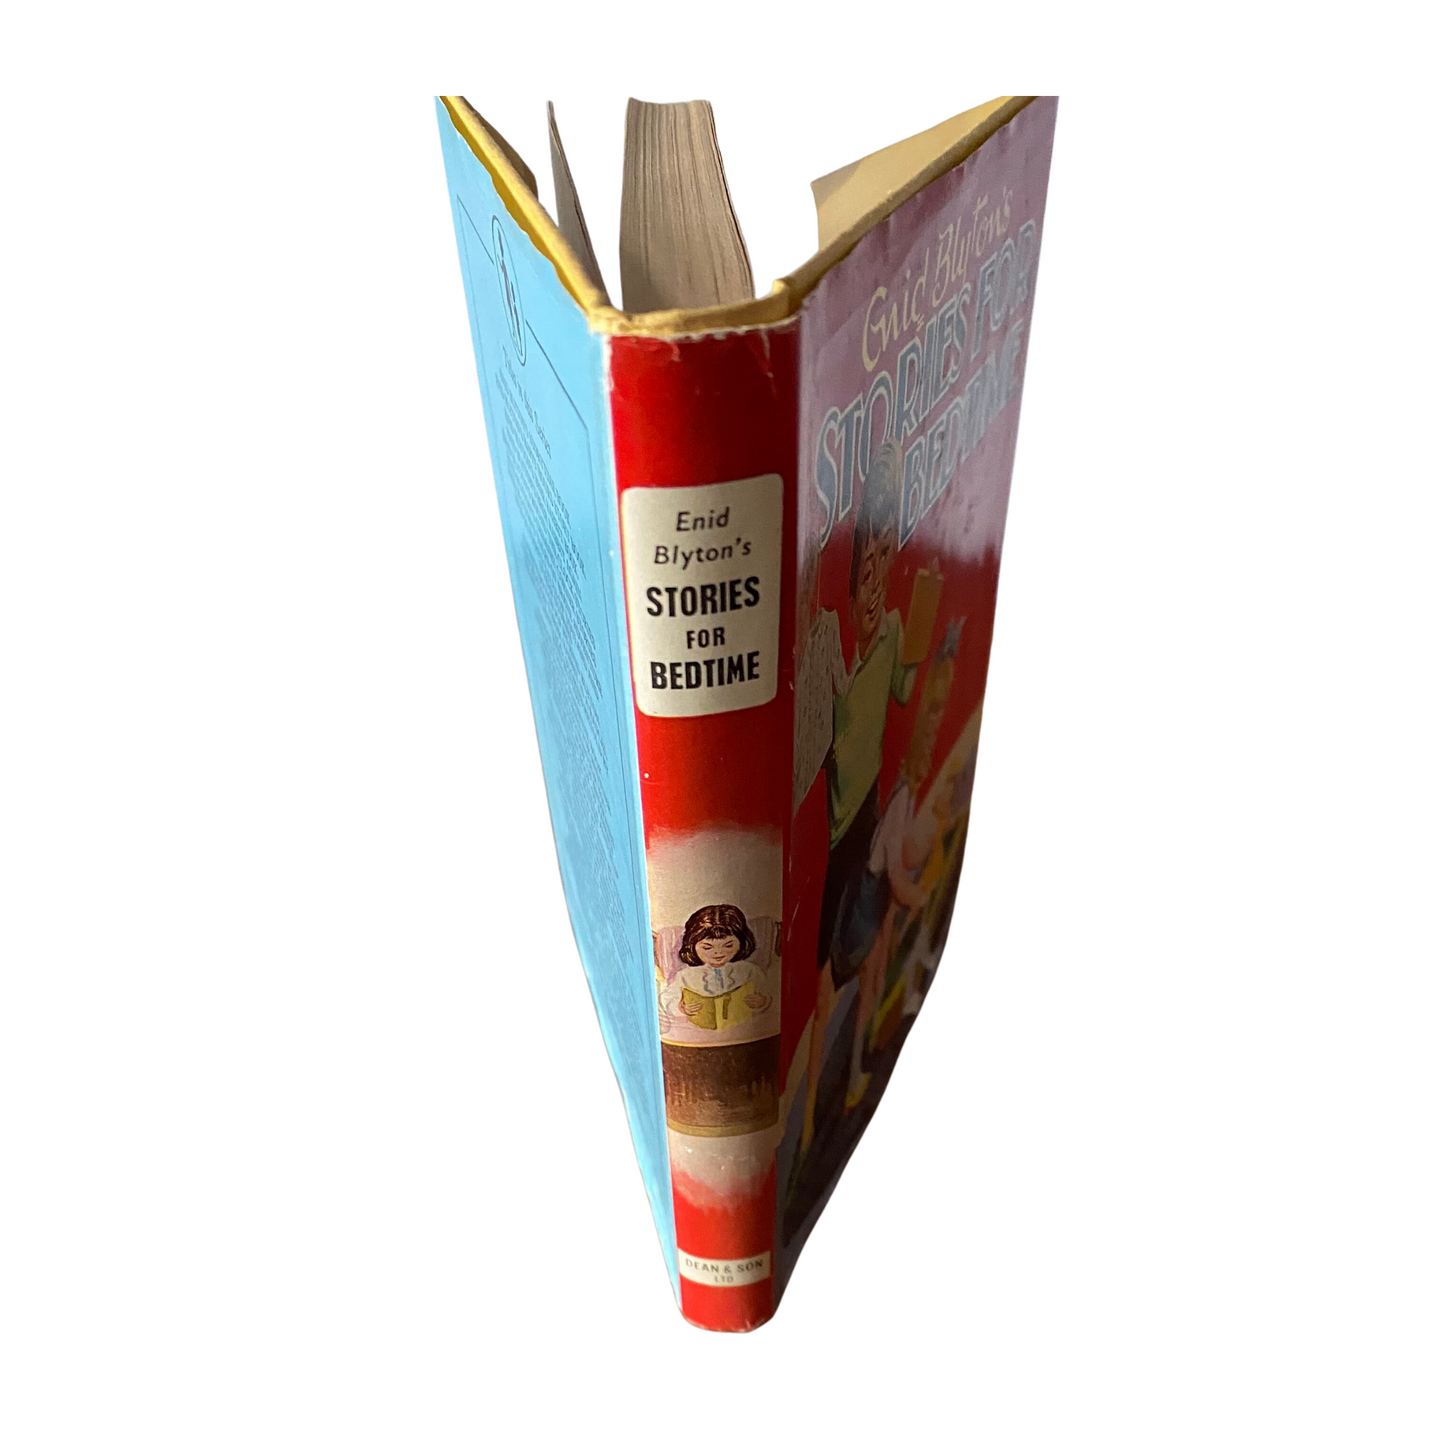 Enid Blyton’s Stories for Bedtime . 60s vintage Dean & son hardback book with dust jacket. Great nostalgic/ children’s gift idea